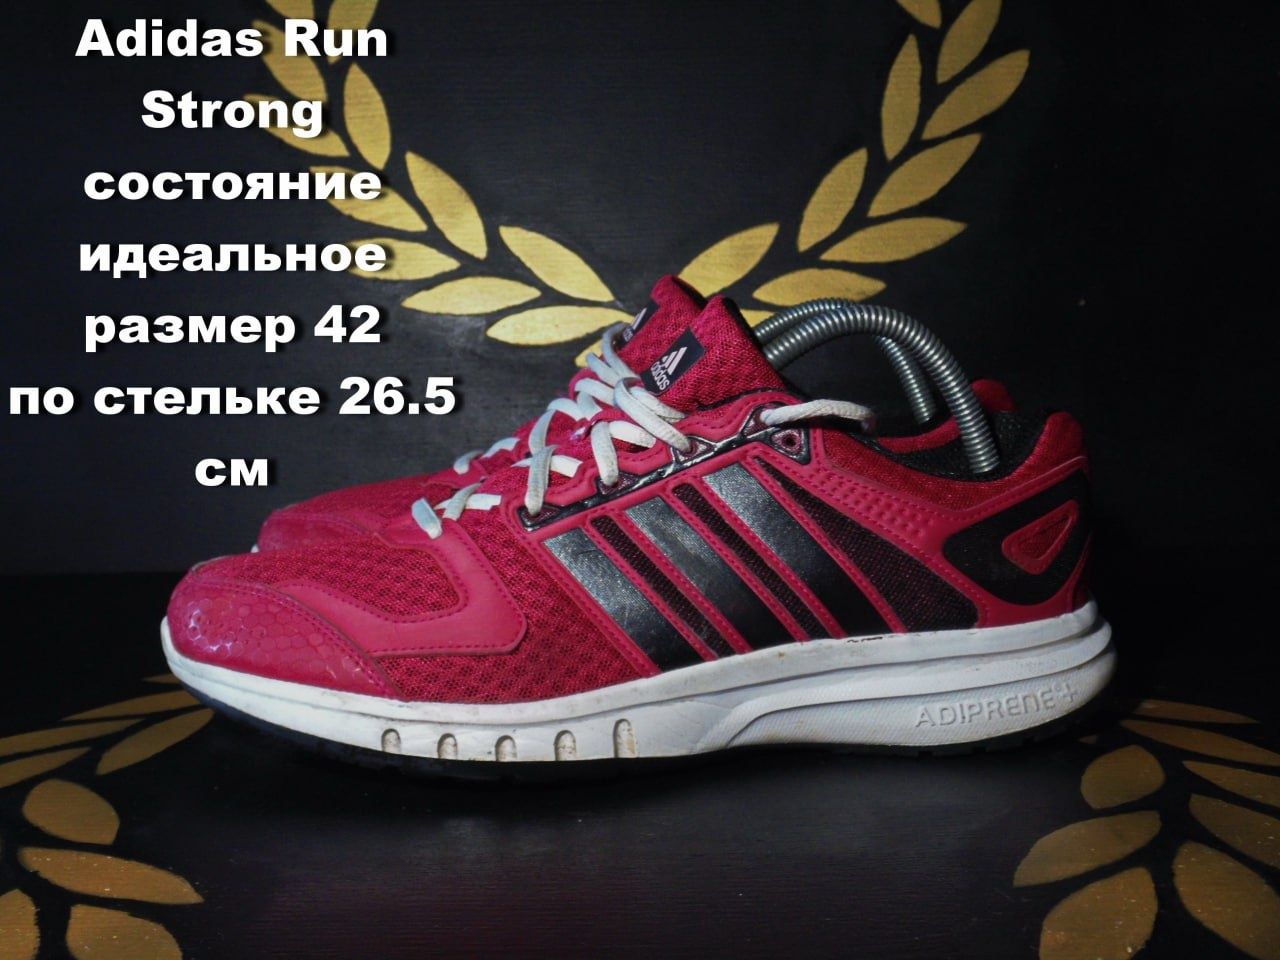 Adidas Run Strong кроссовки размер 42